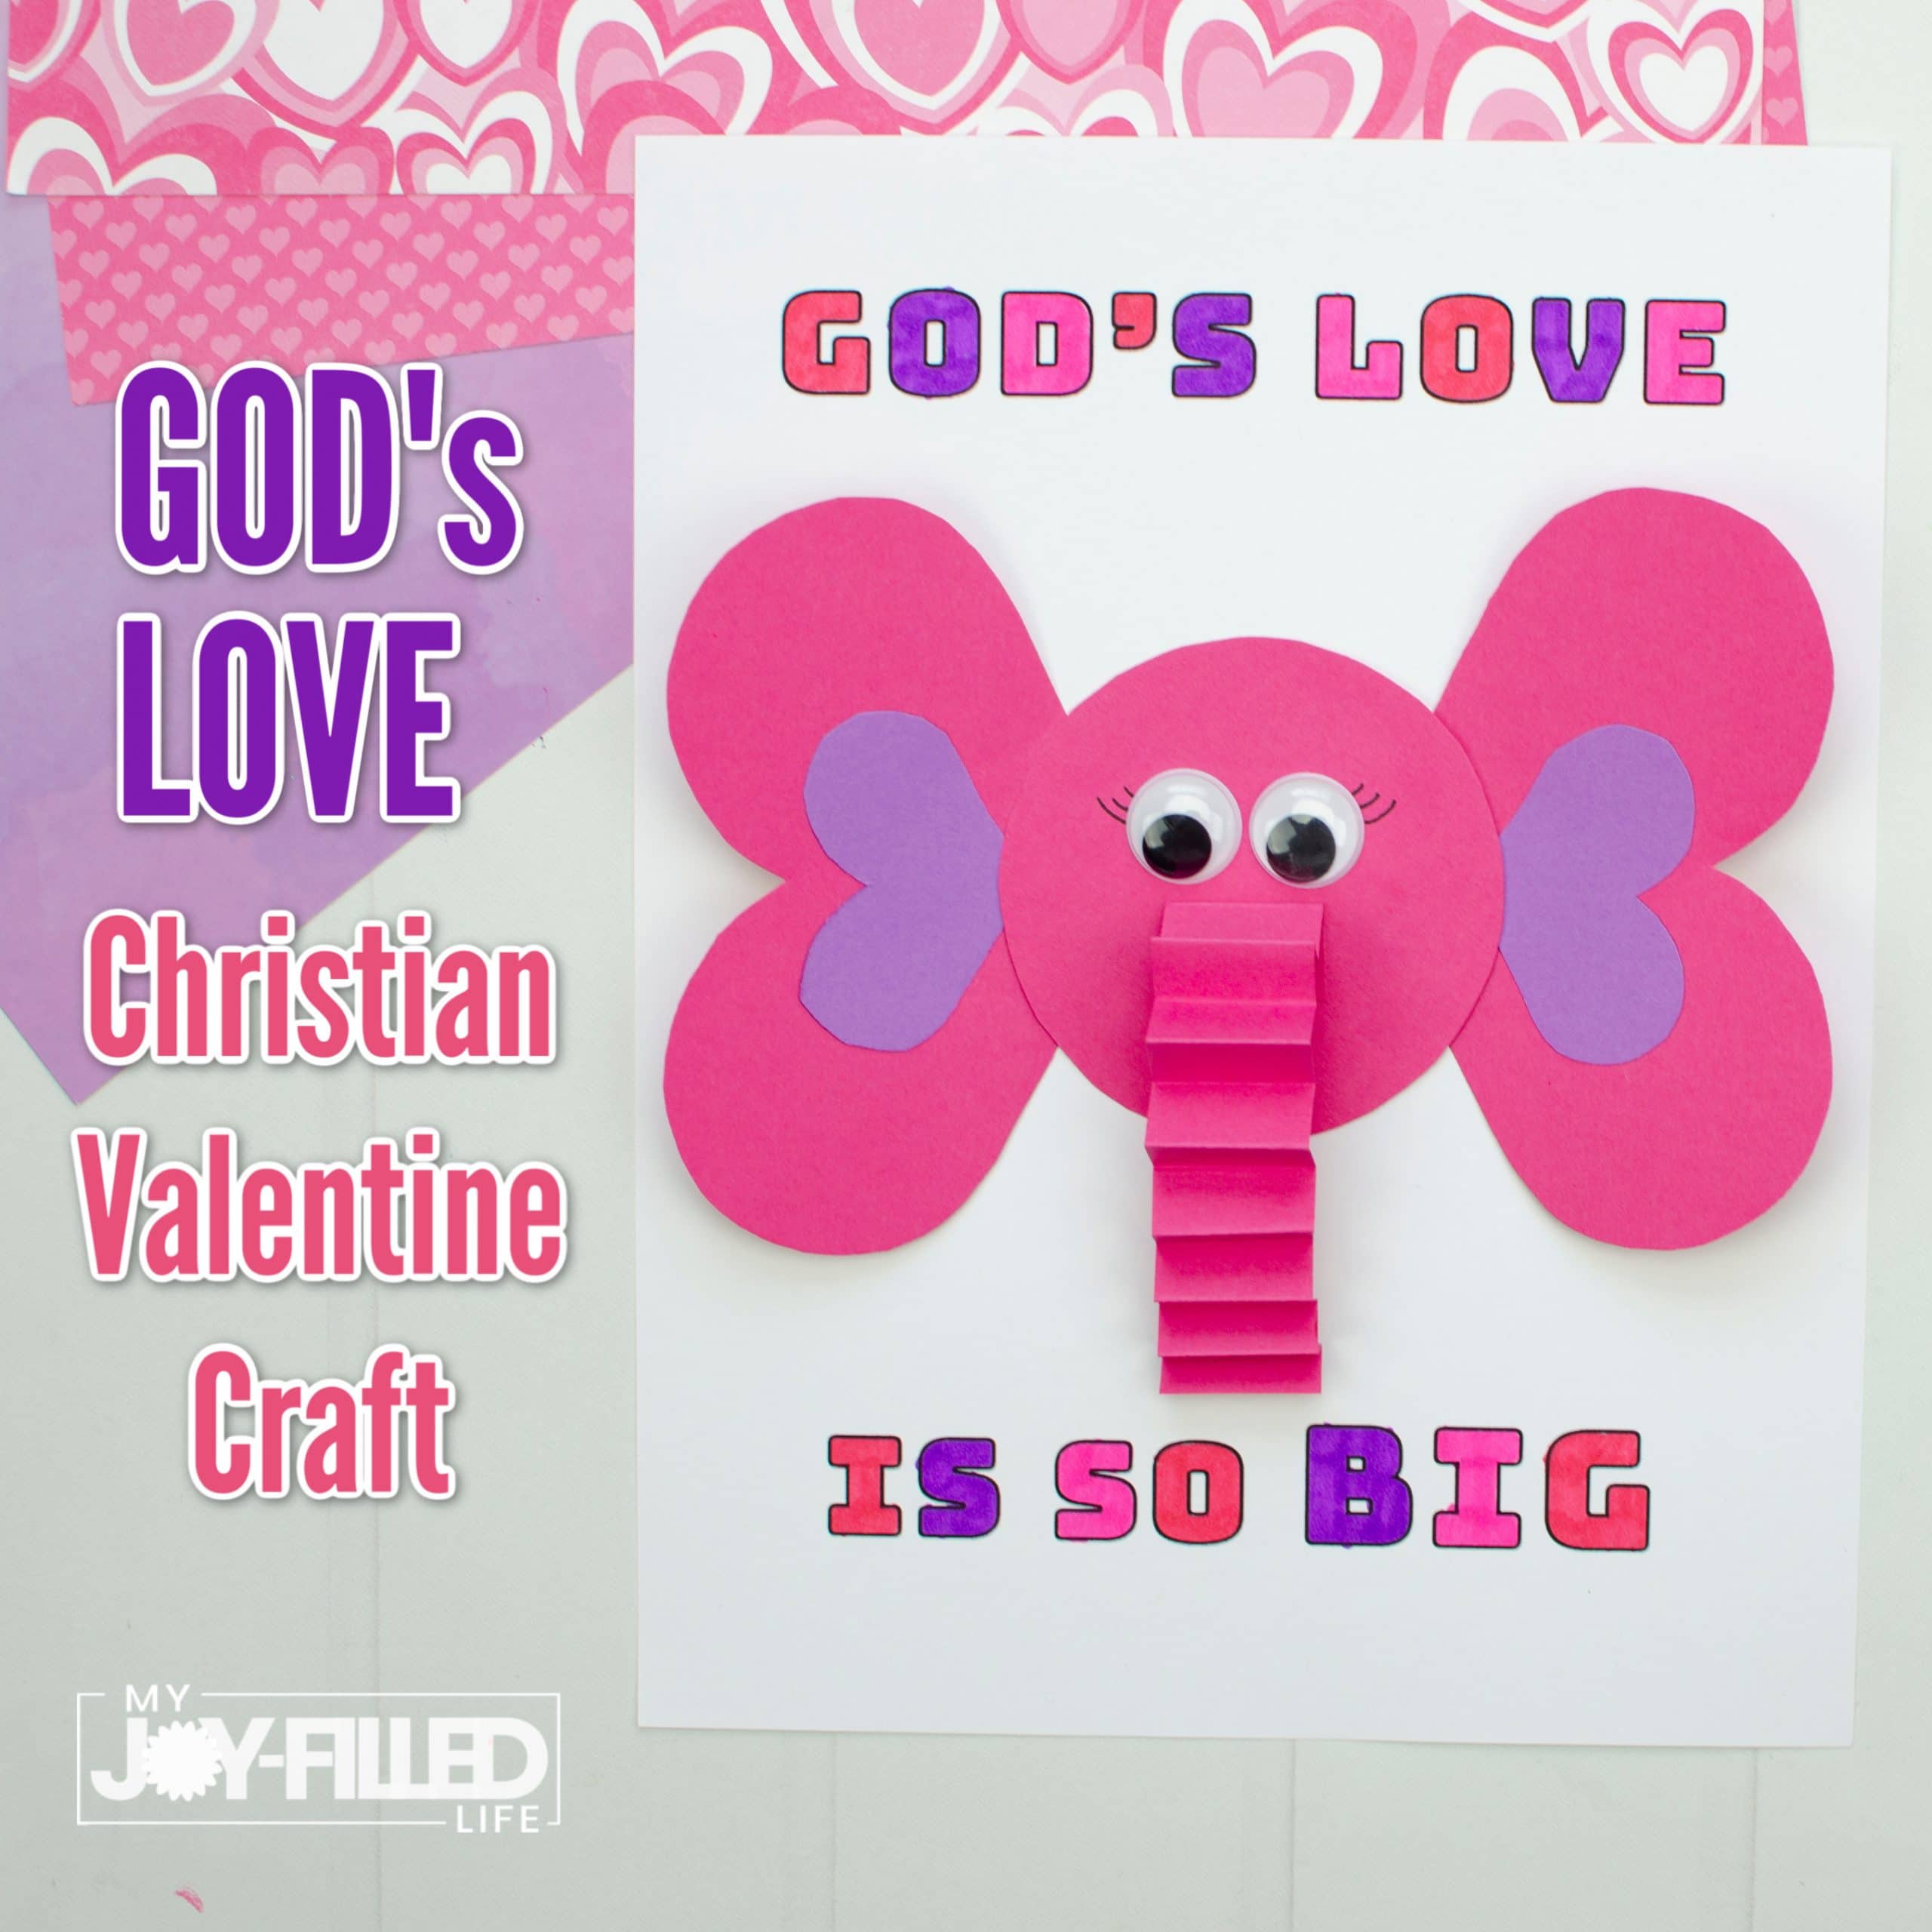 I Love Valentine's Day  Family by God's Design